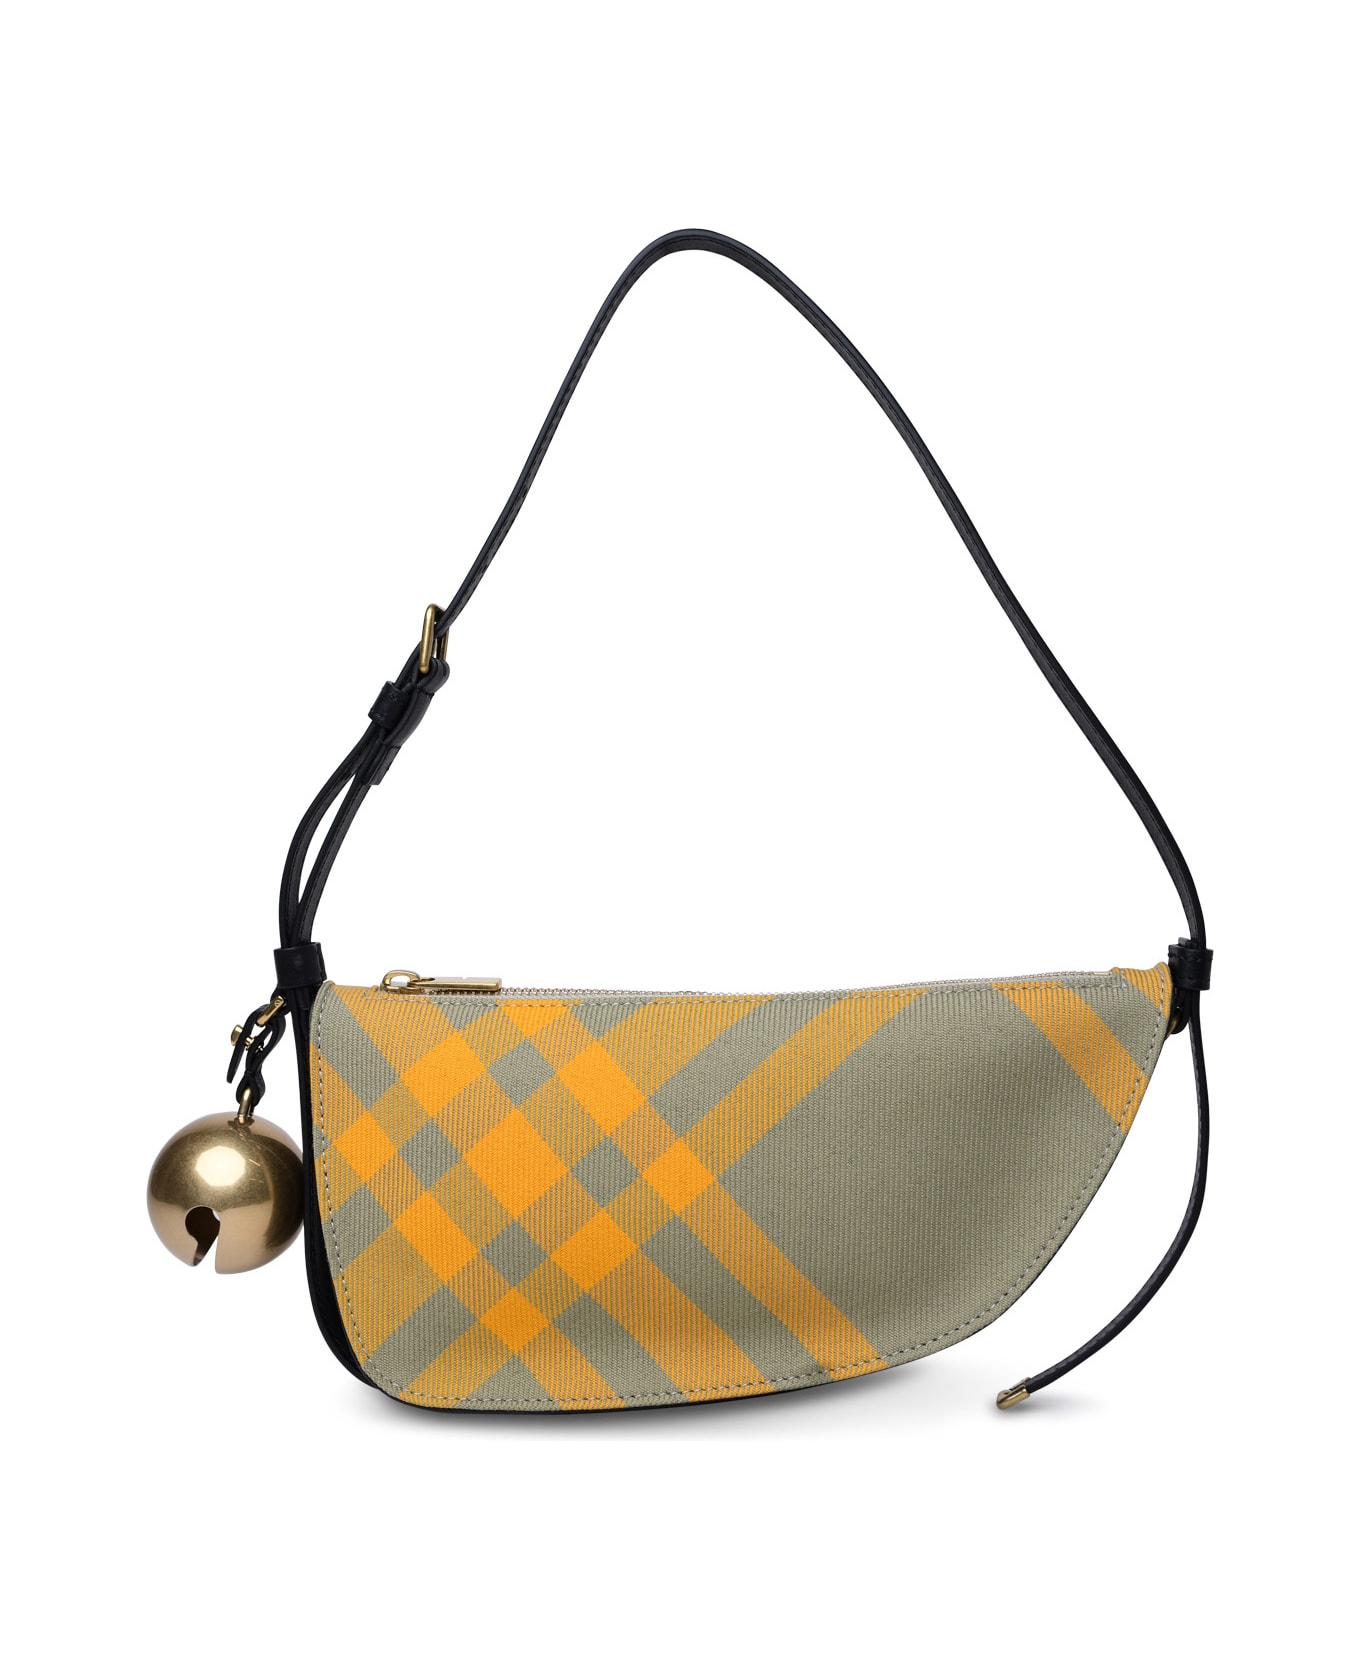 Burberry 'shield' Multicolor Wool Blend Bag - HUNTER IP CHECK トートバッグ